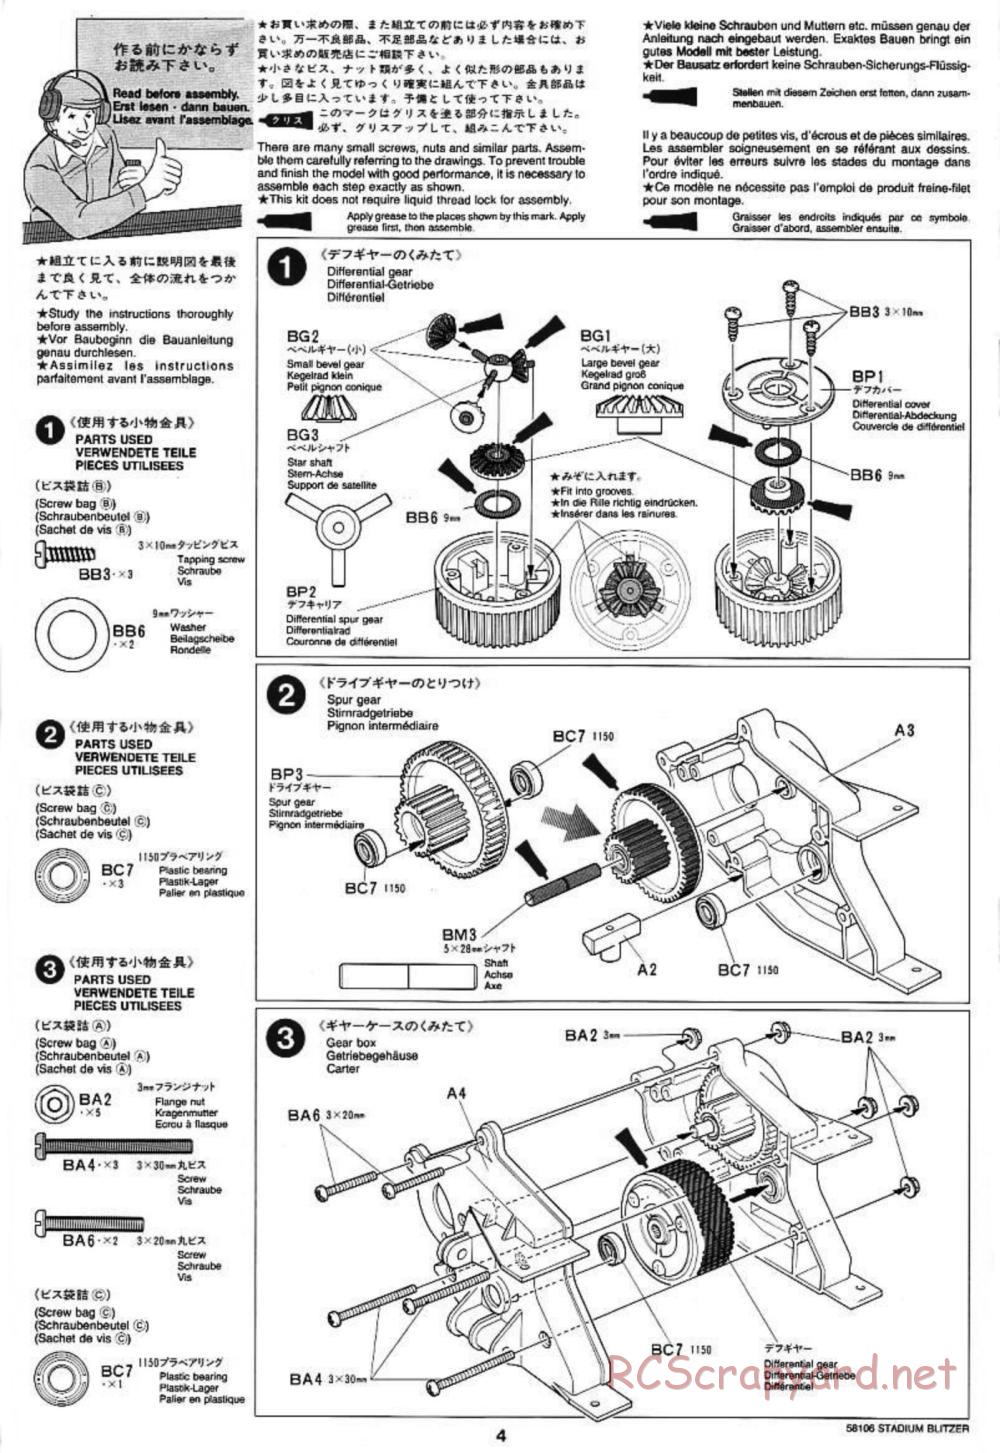 Tamiya - Stadium Blitzer Chassis - Manual - Page 4